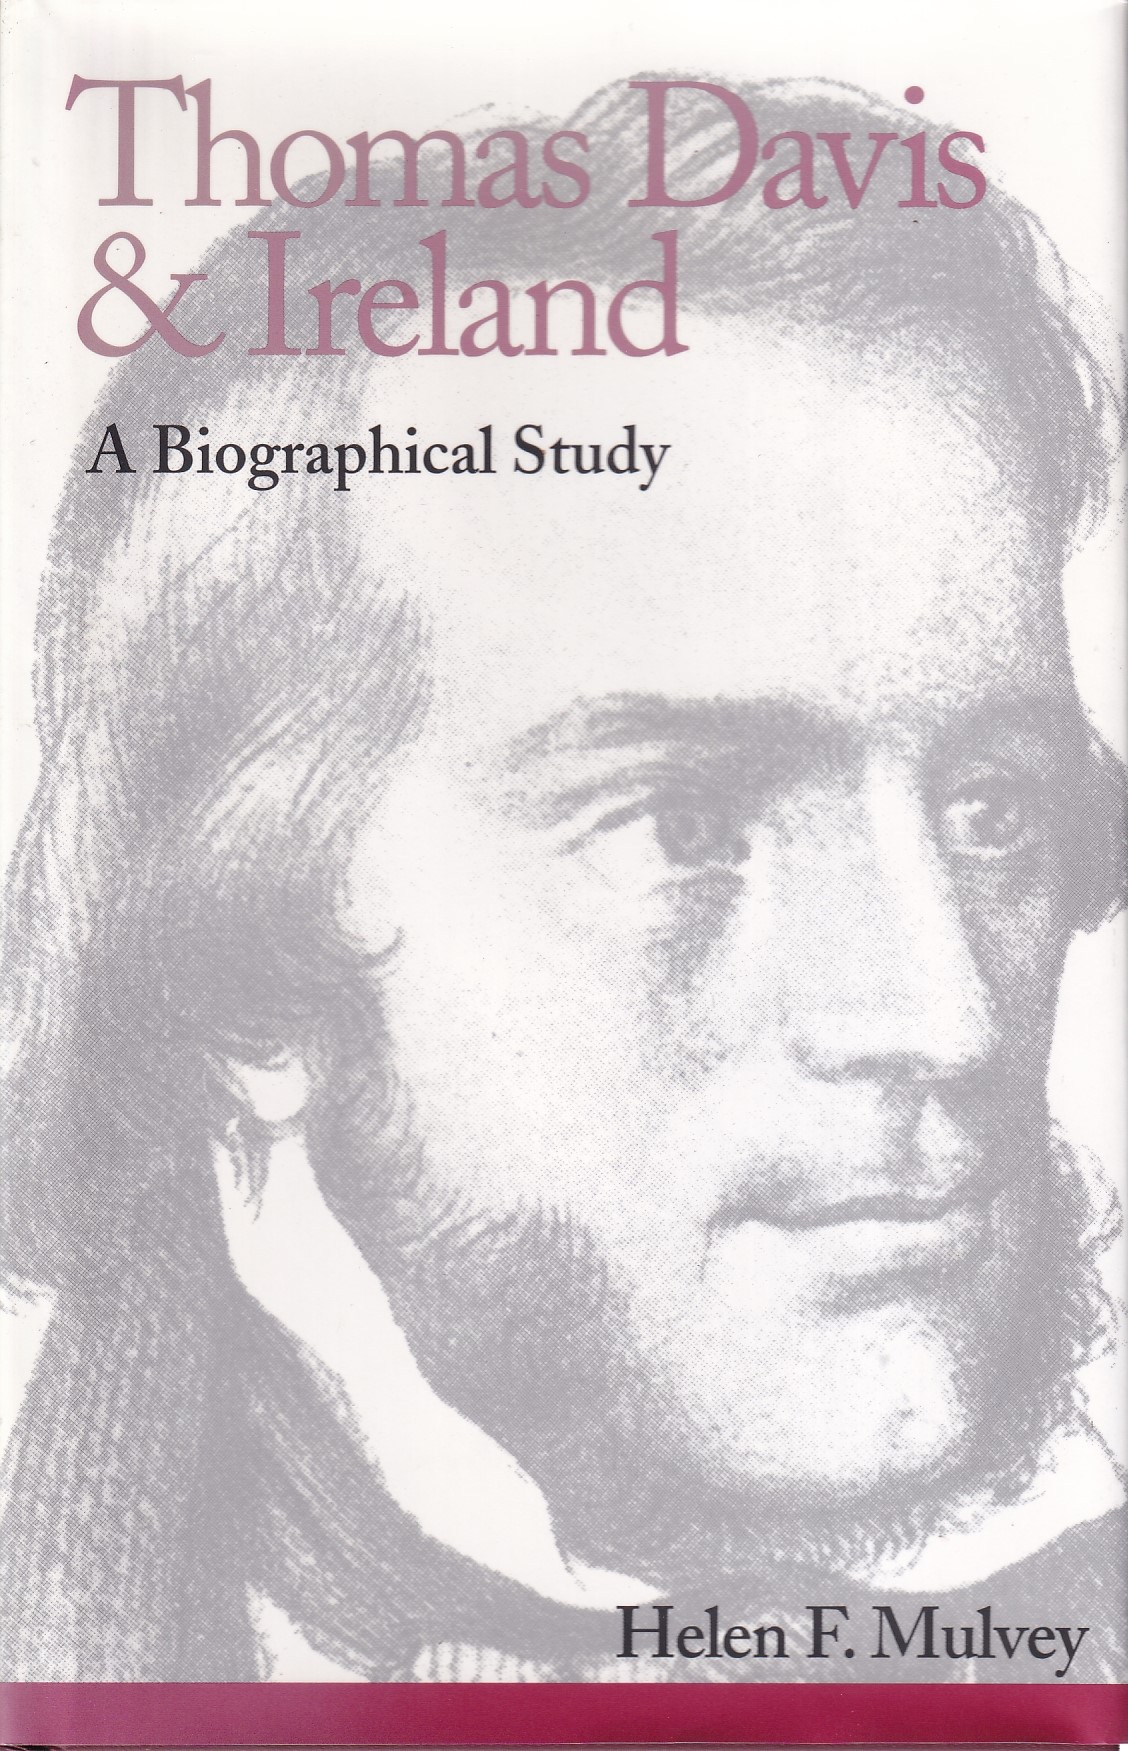 Thomas Davis & Ireland: A Biographical Study by Helen F. Mulvey